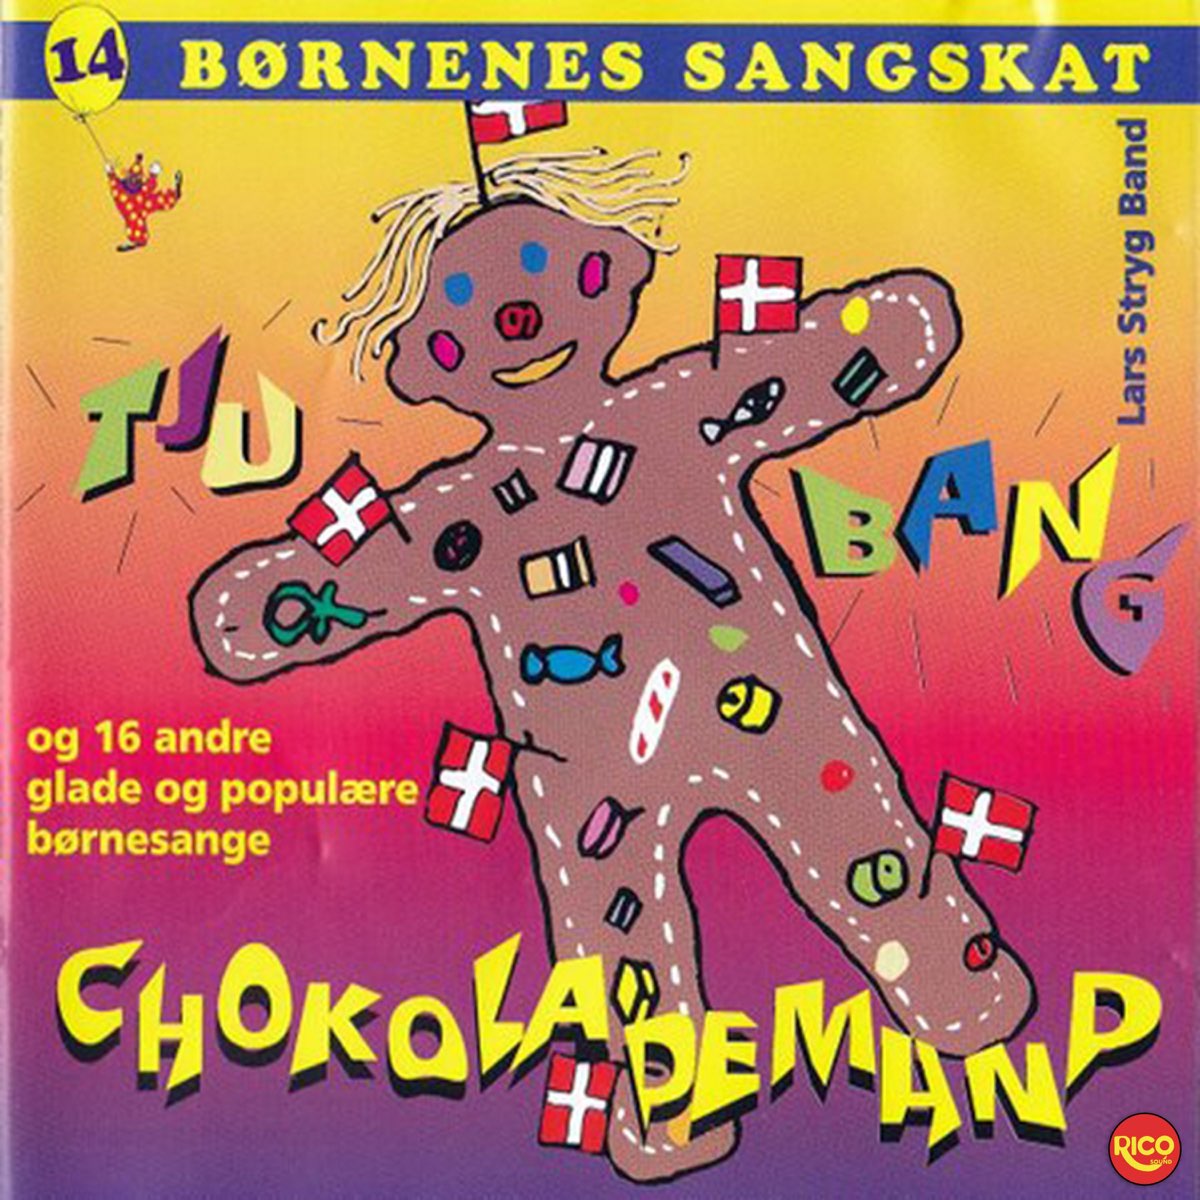 Børnenes sangskat, Vol. 14 - Chokolademand - Album by Lars Stryg Band -  Apple Music